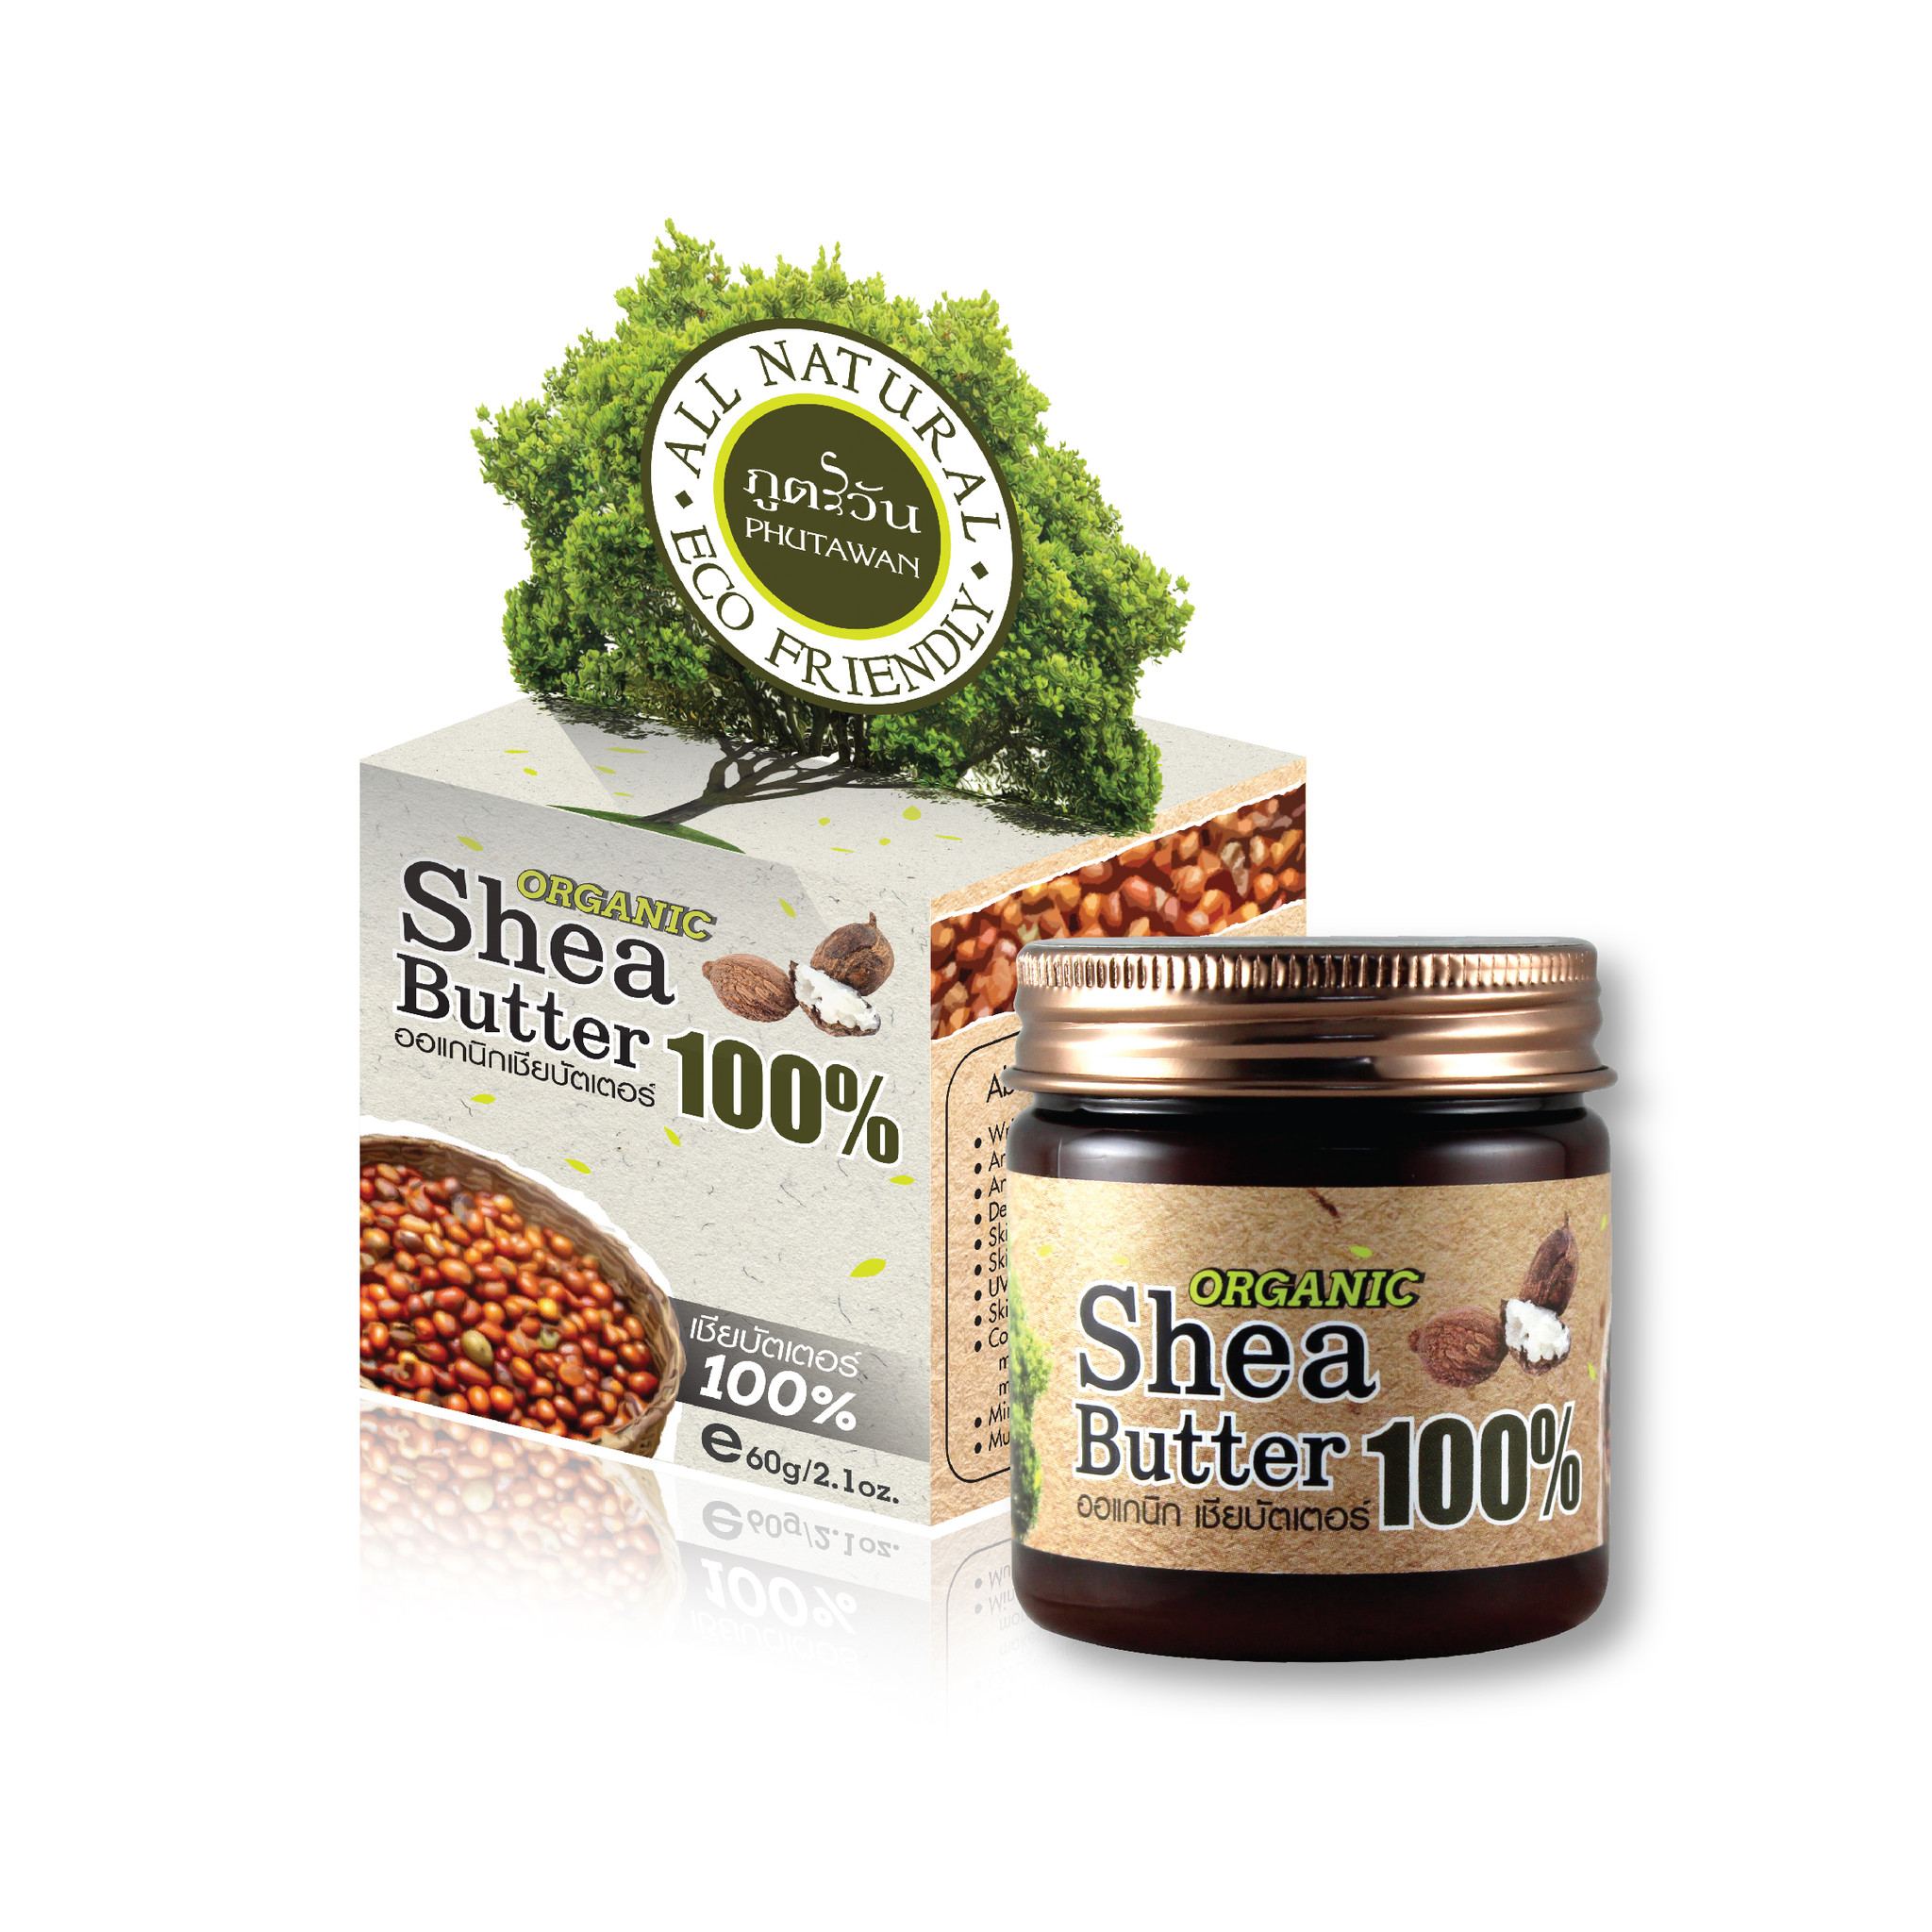 Тайское органическое масло ШИ (карите) 100% organic Shea Butter Phutawan 60 гр.